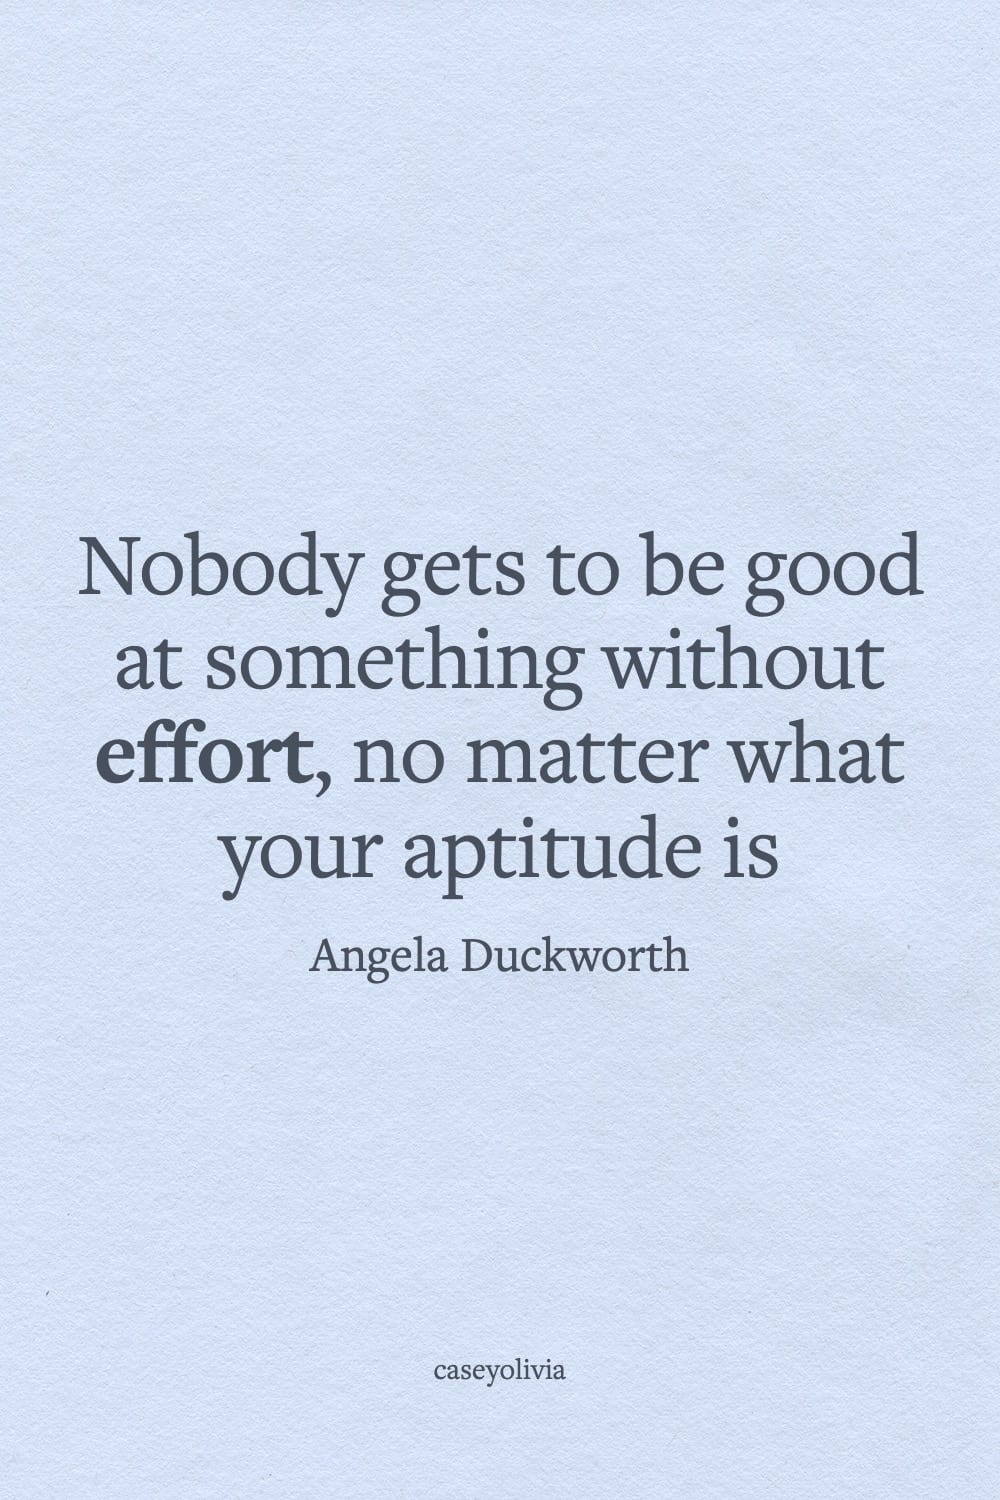 angela duckworth inspiriational words about putting in the effort